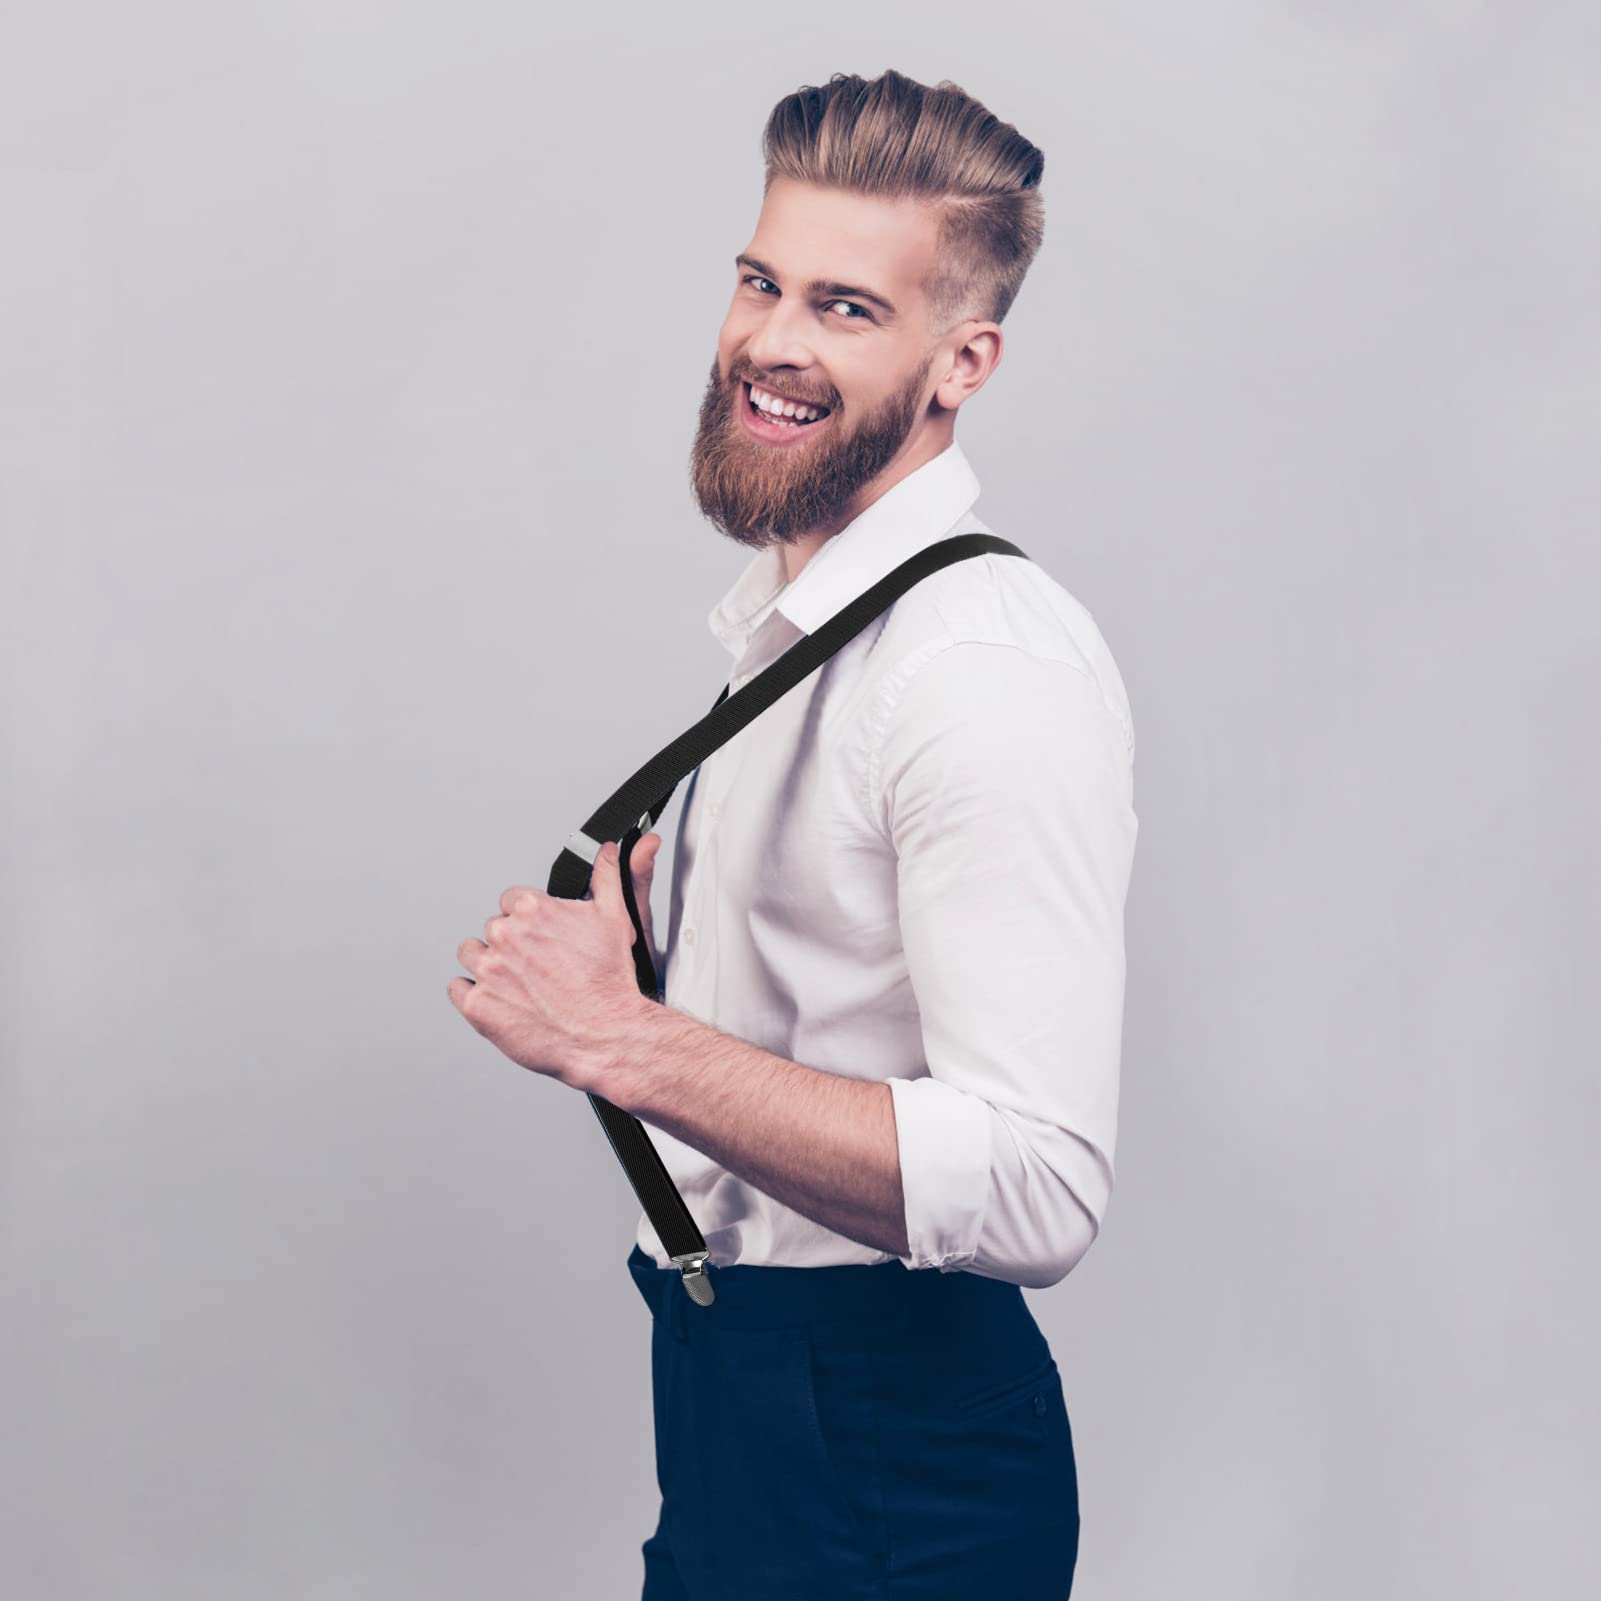 habibee Solid Color Mens Suspender Y Shape with Strong Clips Adjustable Braces